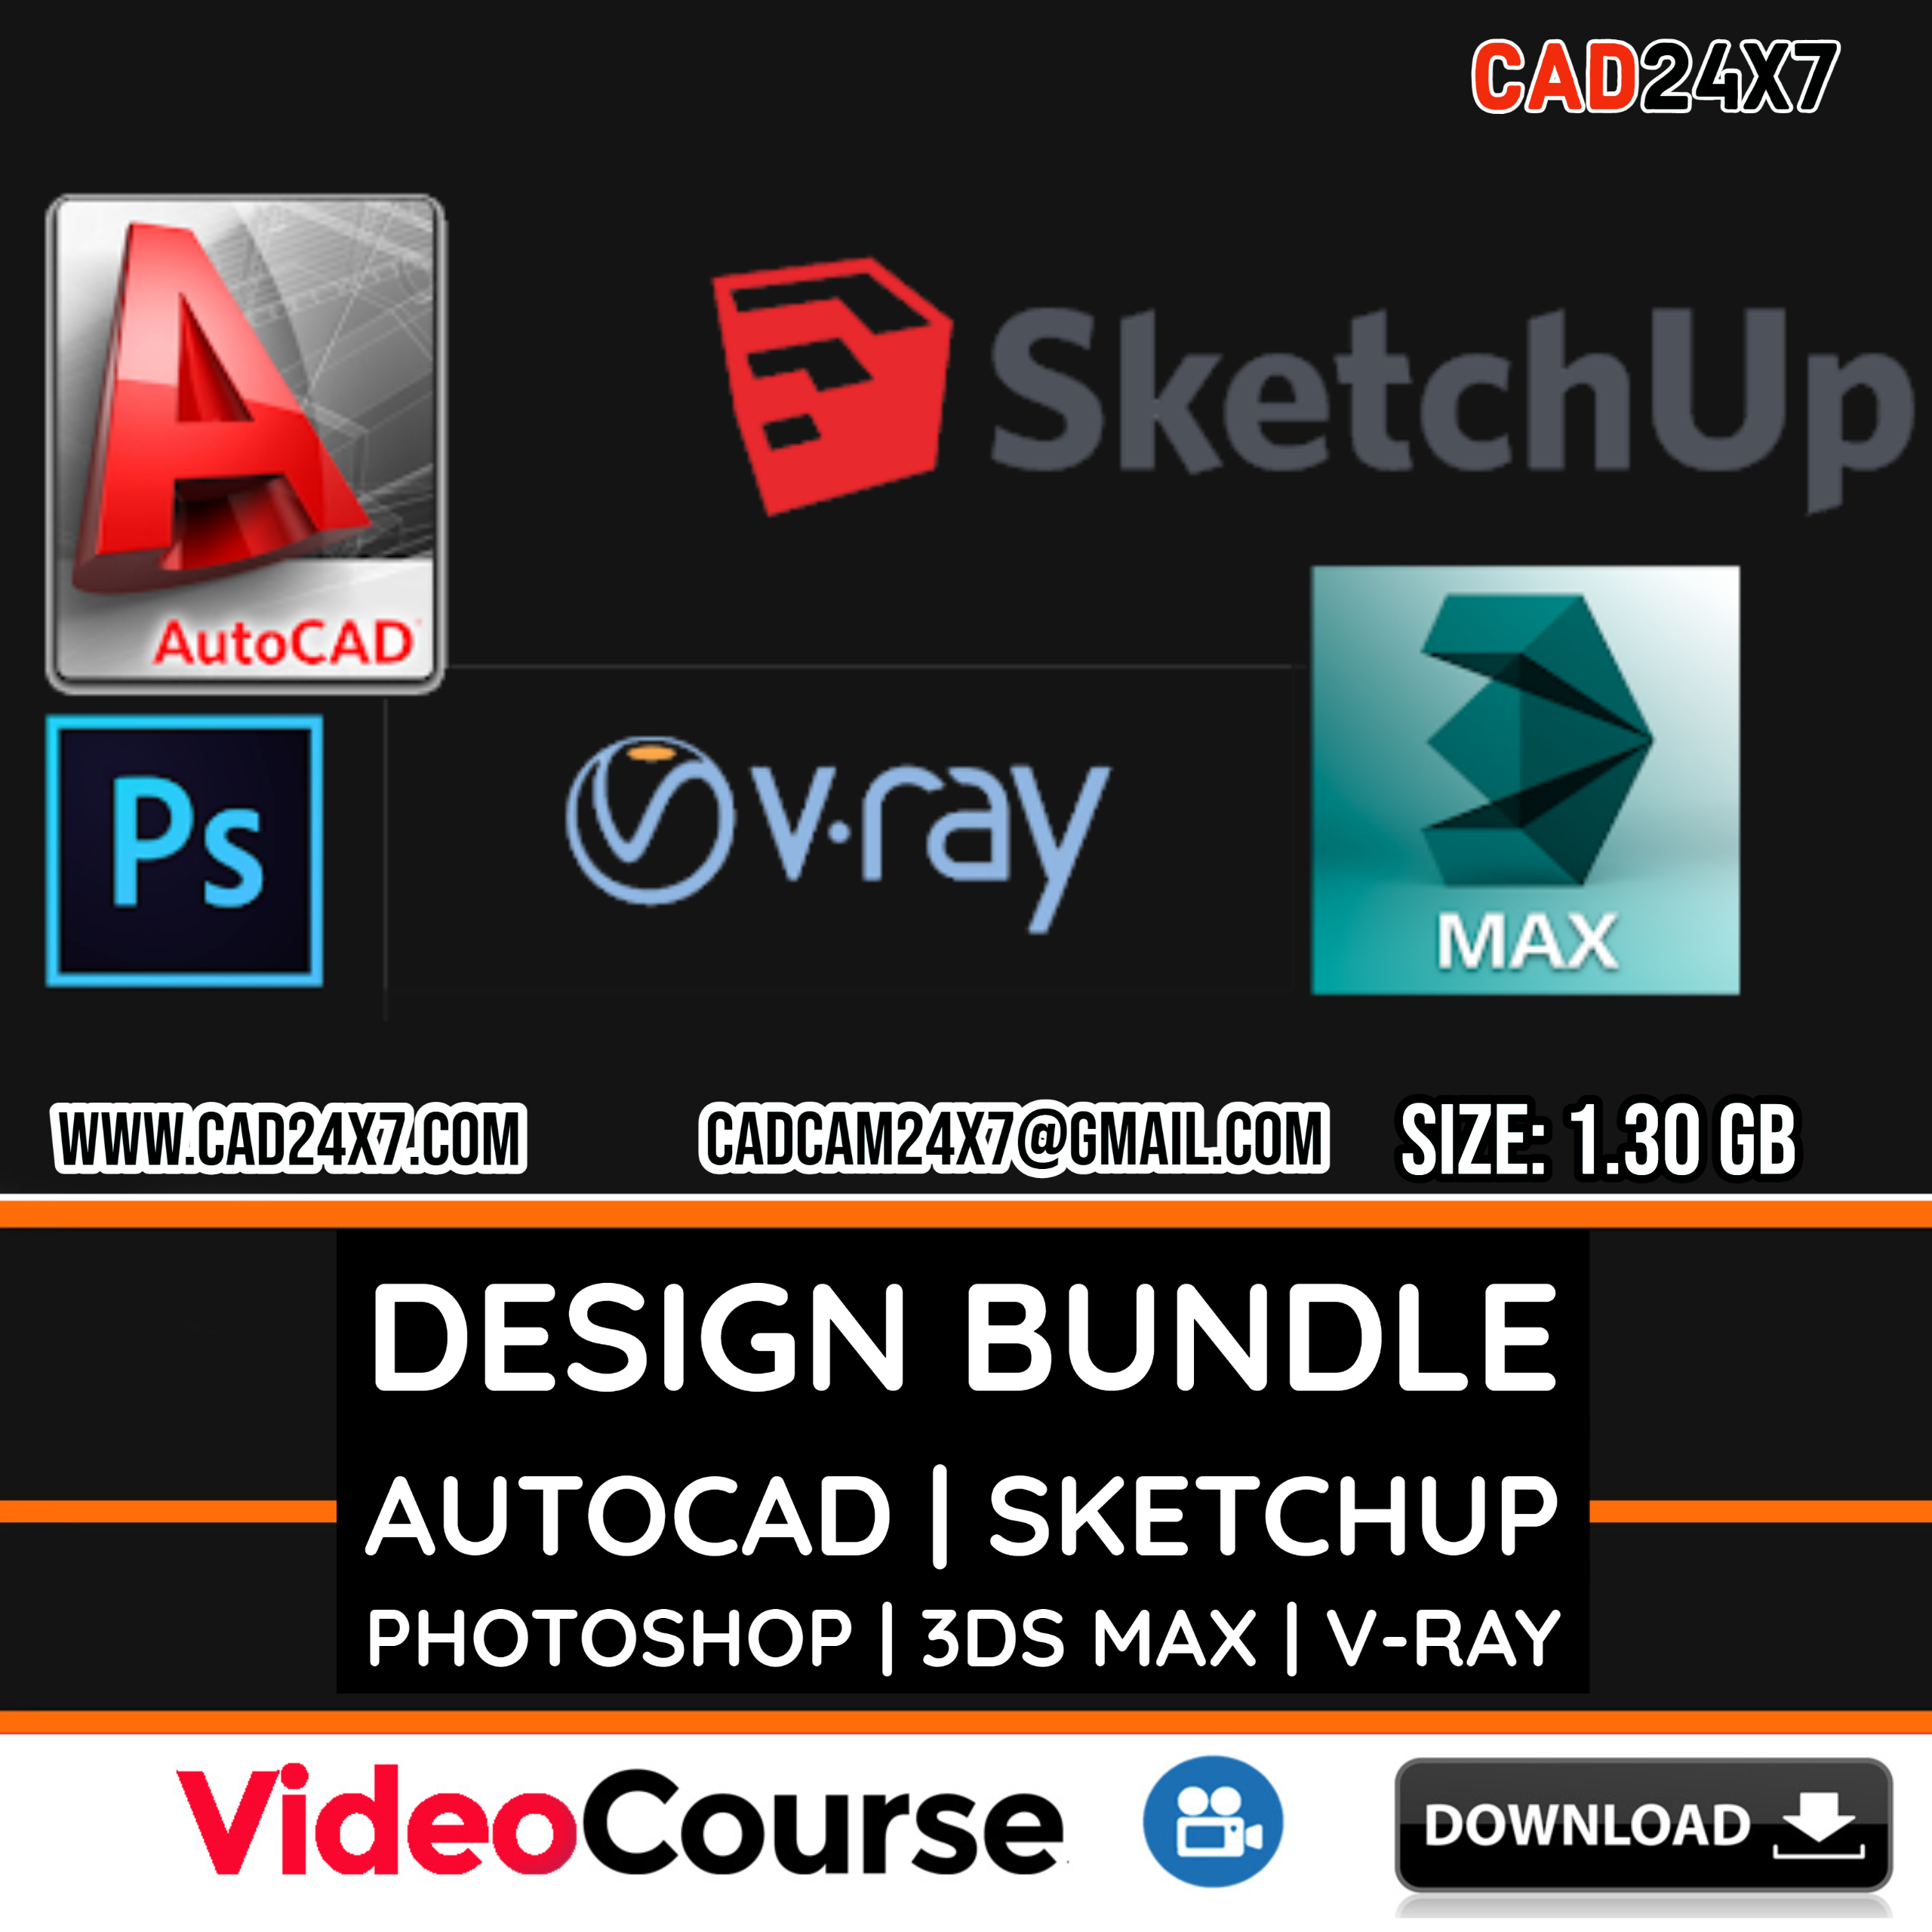 Design Bundle AutoCAD, SketchUp, Photoshop, 3ds Max & V-Ray